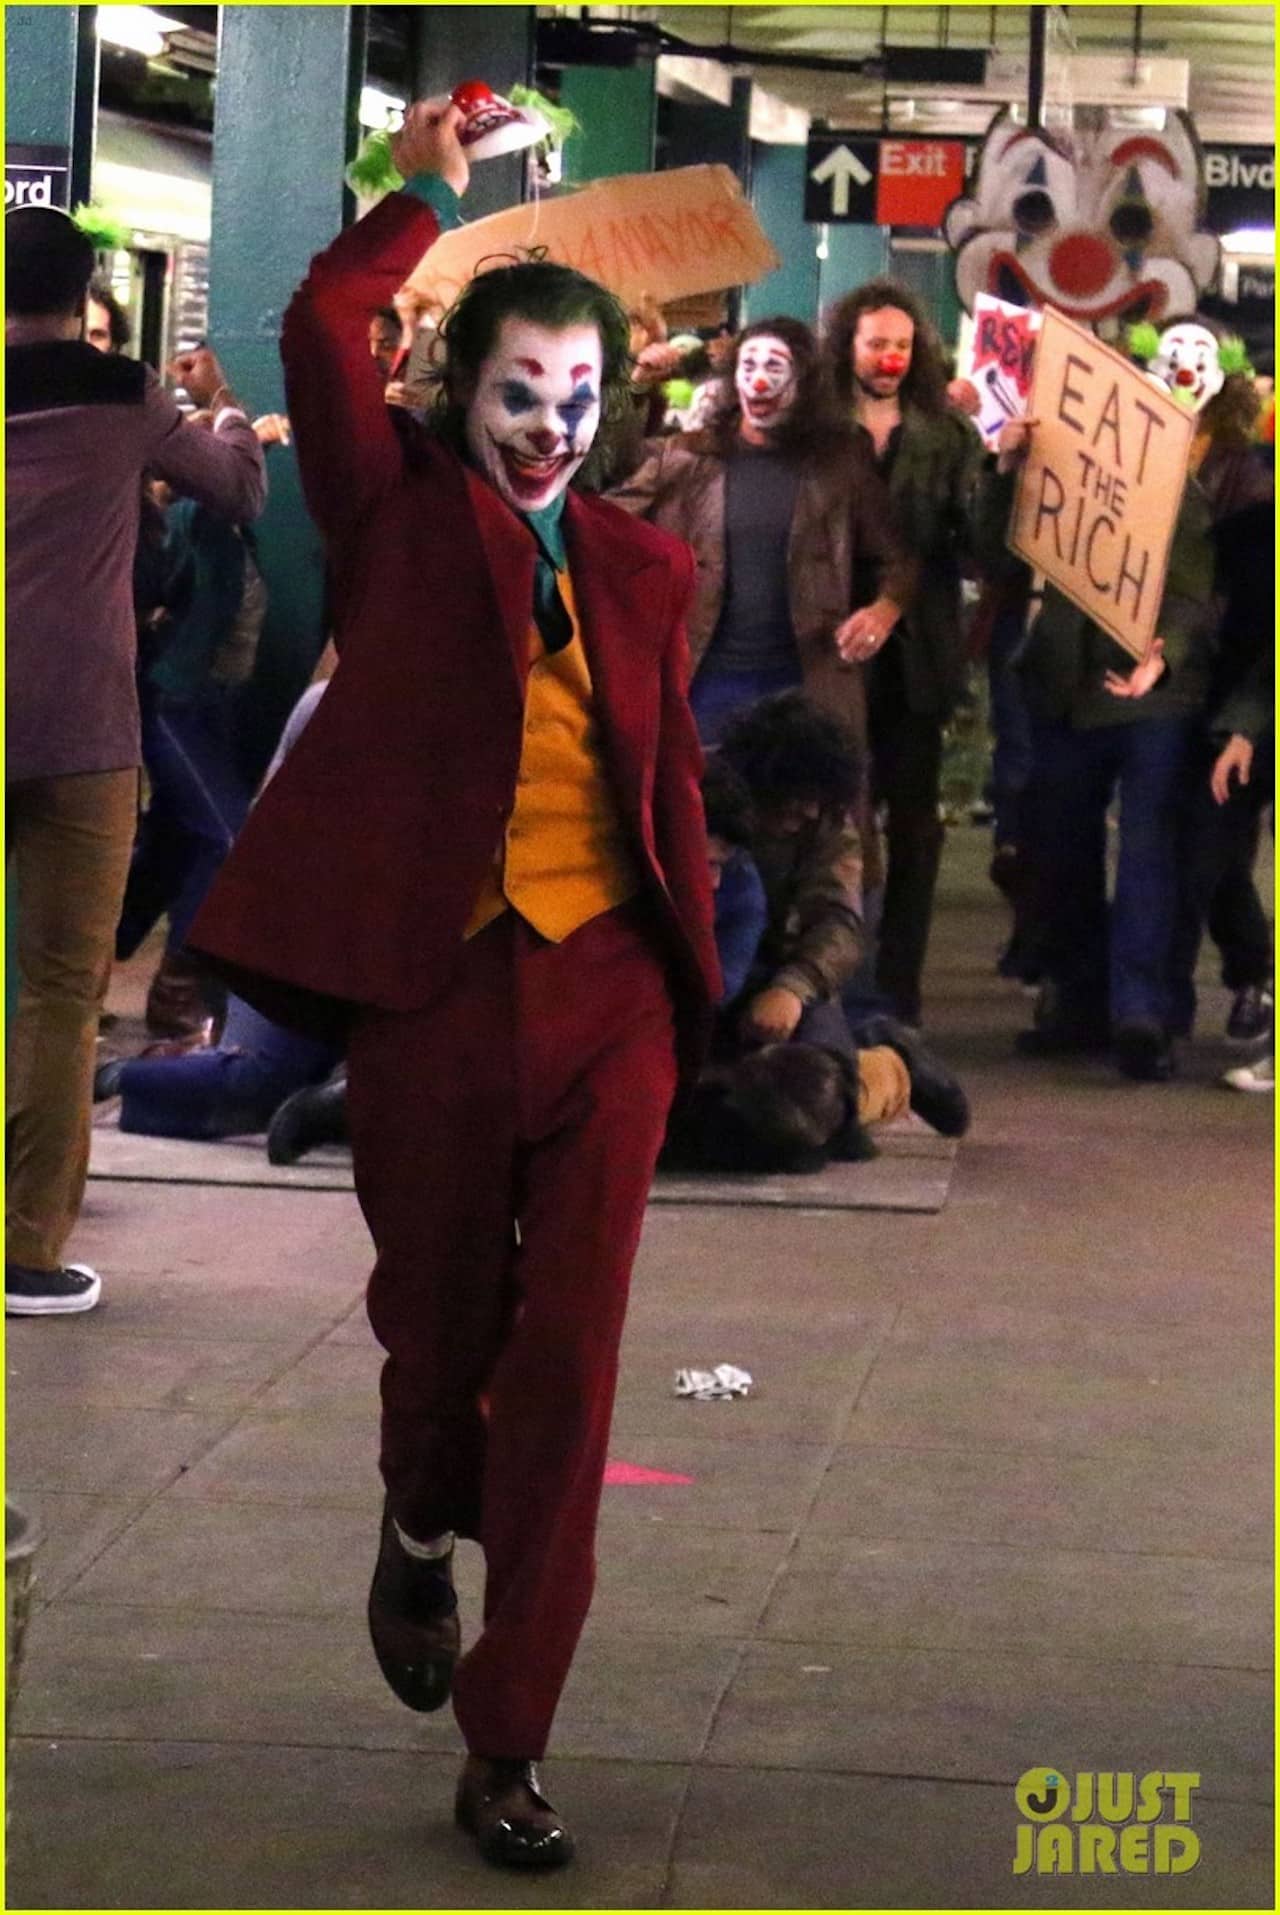 Joker Cinematographe.it